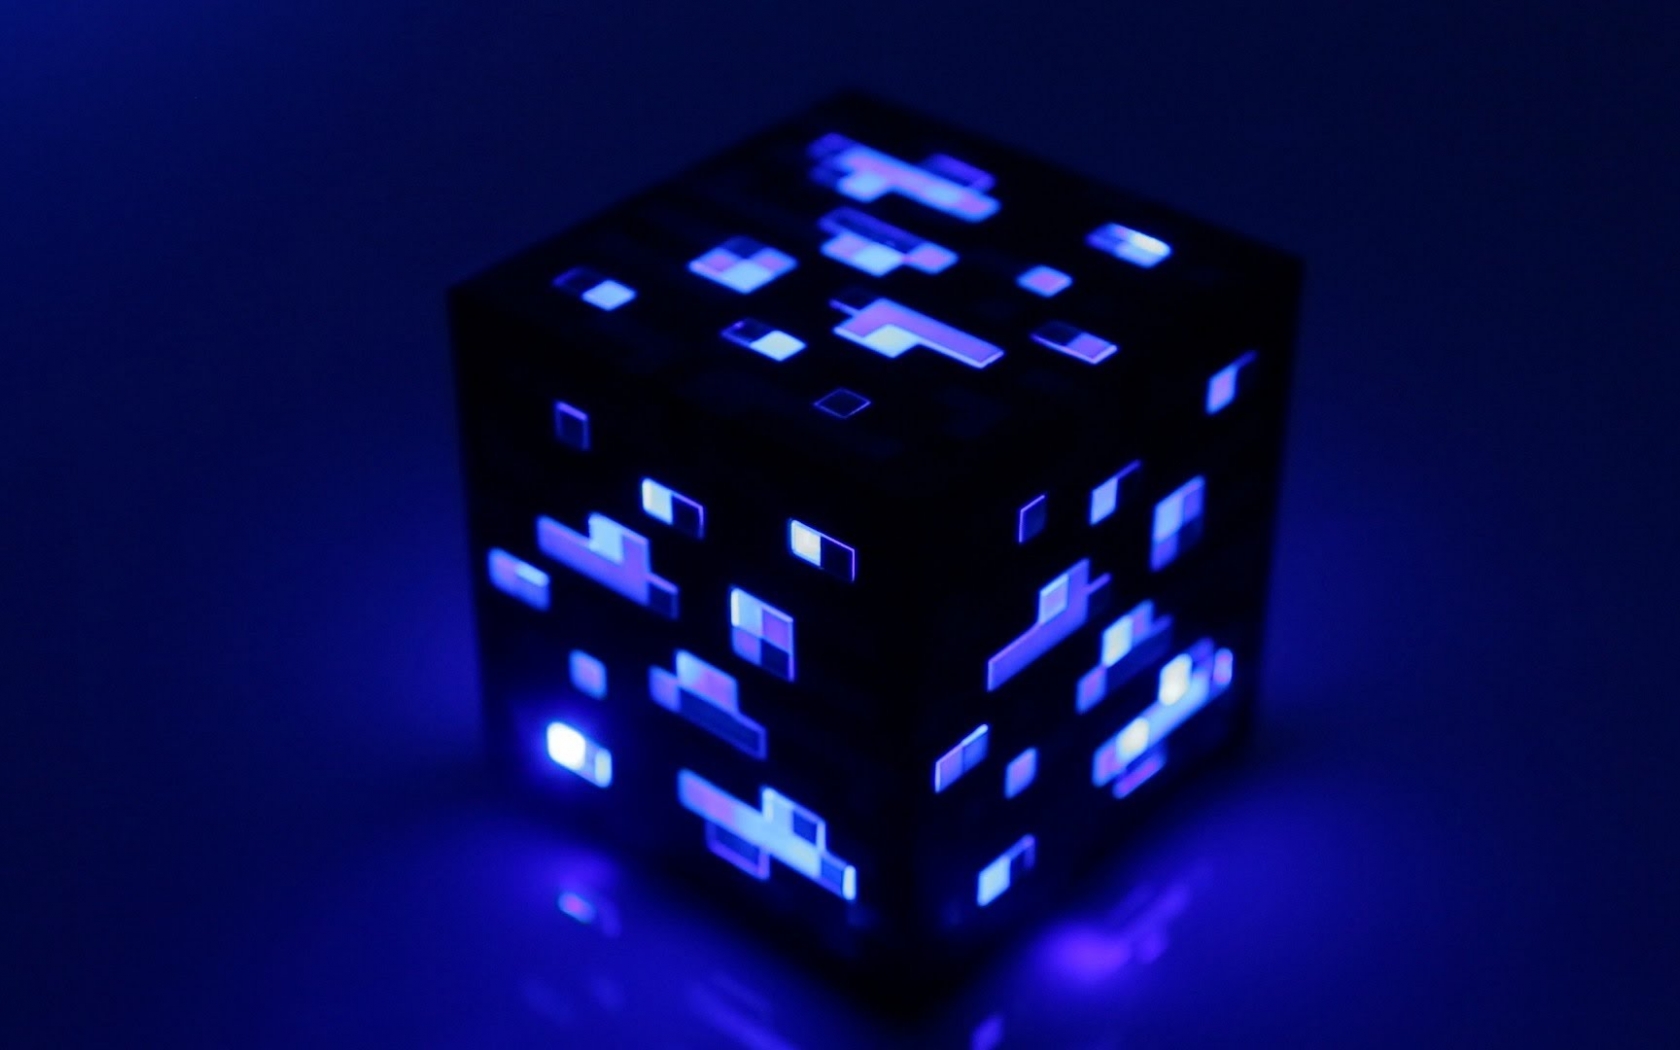 minecraftダイヤモンド壁紙,コバルトブルー,青い,ゲーム,光,サイコロ